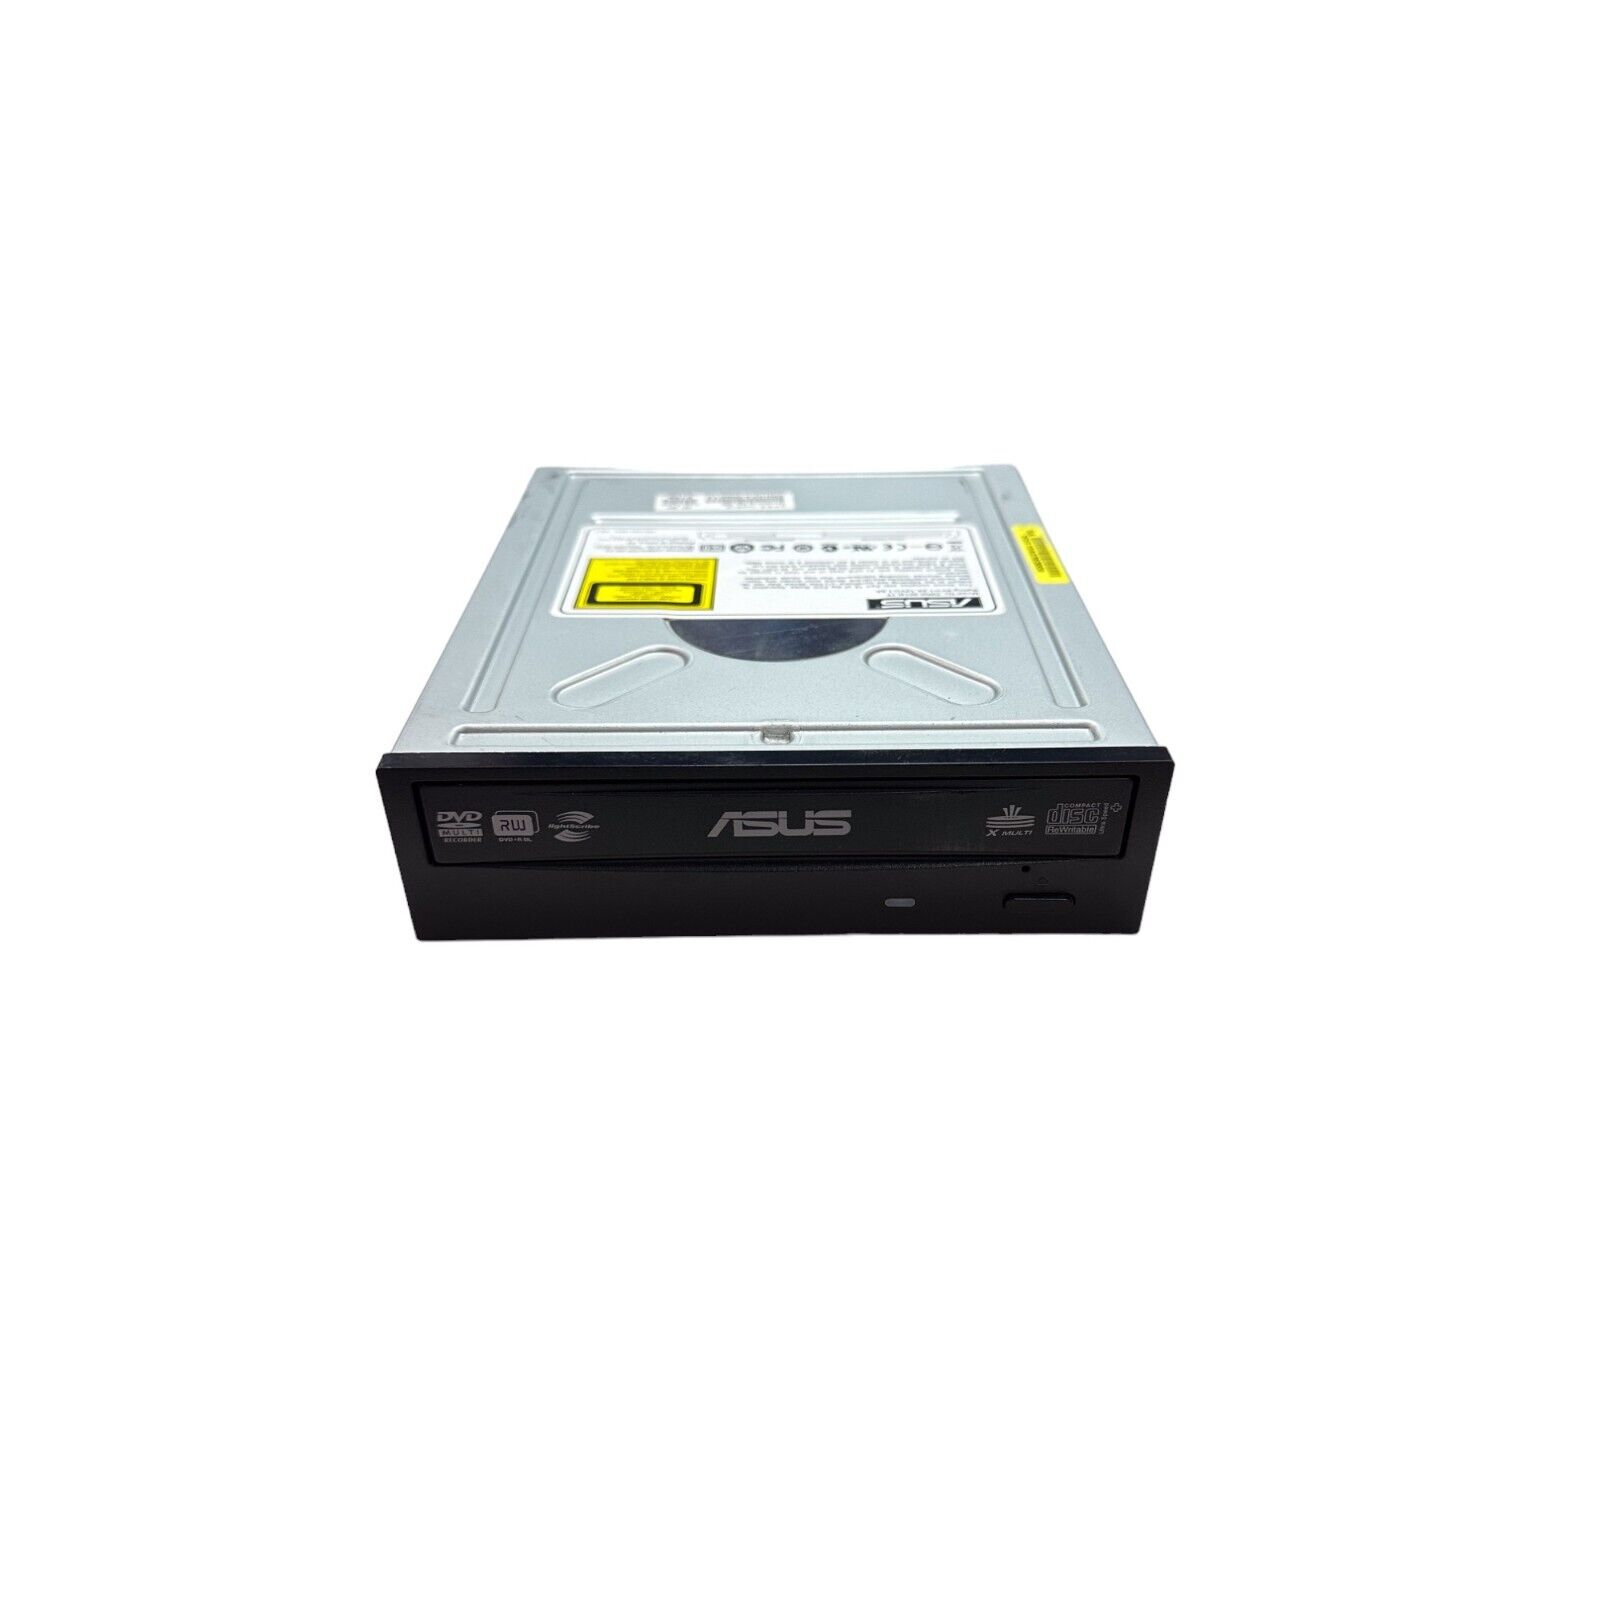 ASUS DRW-2014L1T SATA DVDRW Recorder Drive GENUINE DVD BURNER WITH LIGHT SCRIBE